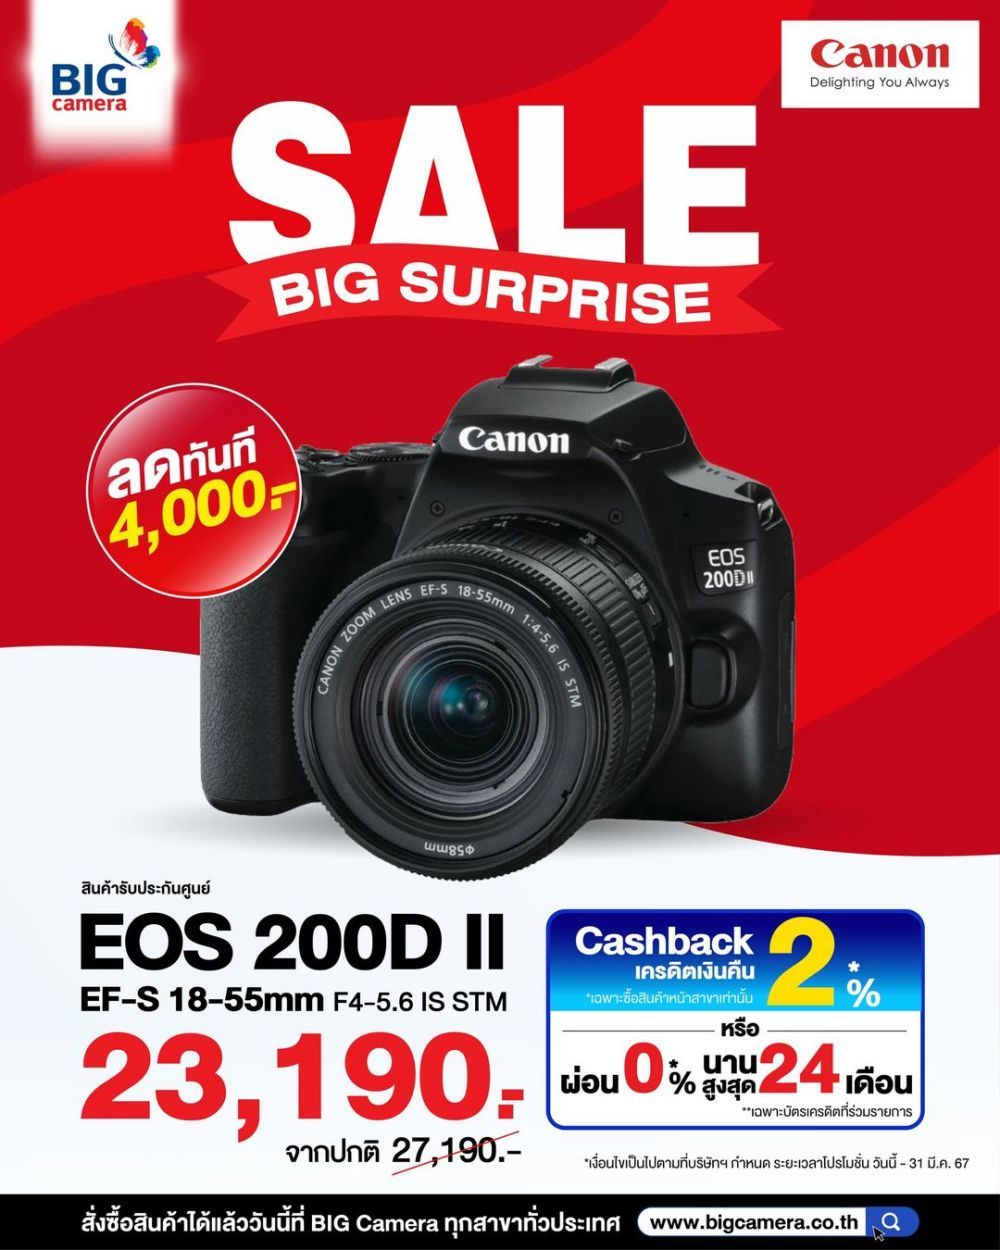 Canon EOS 200D II Big Surprise Sale ลดทันที 4,000.-